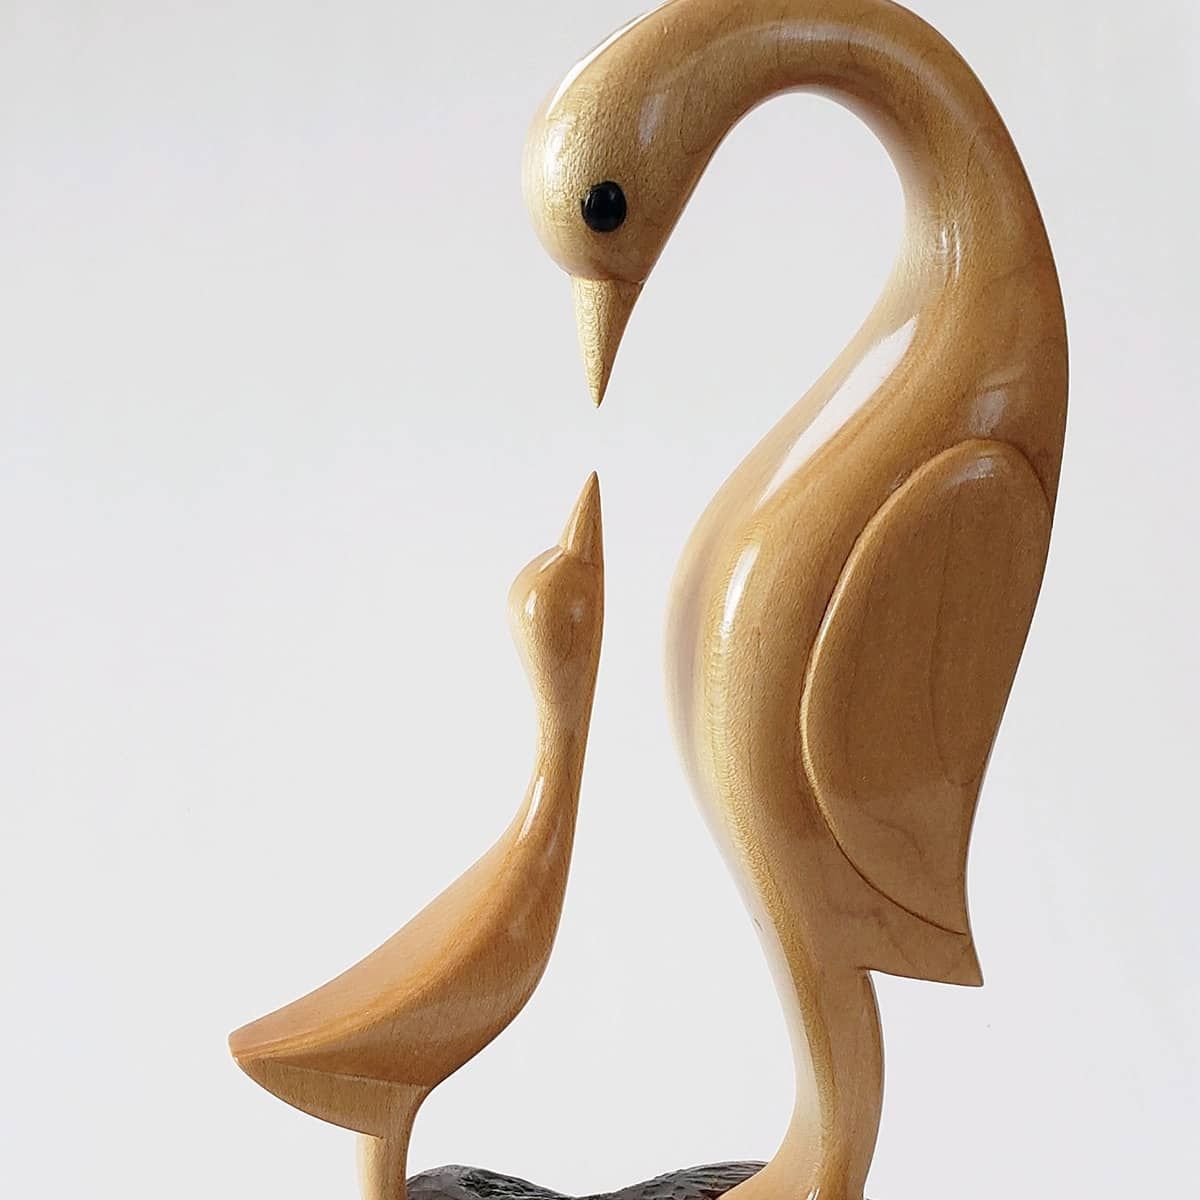 Yasutomo Professional Wood Carving Set - Bird Carving